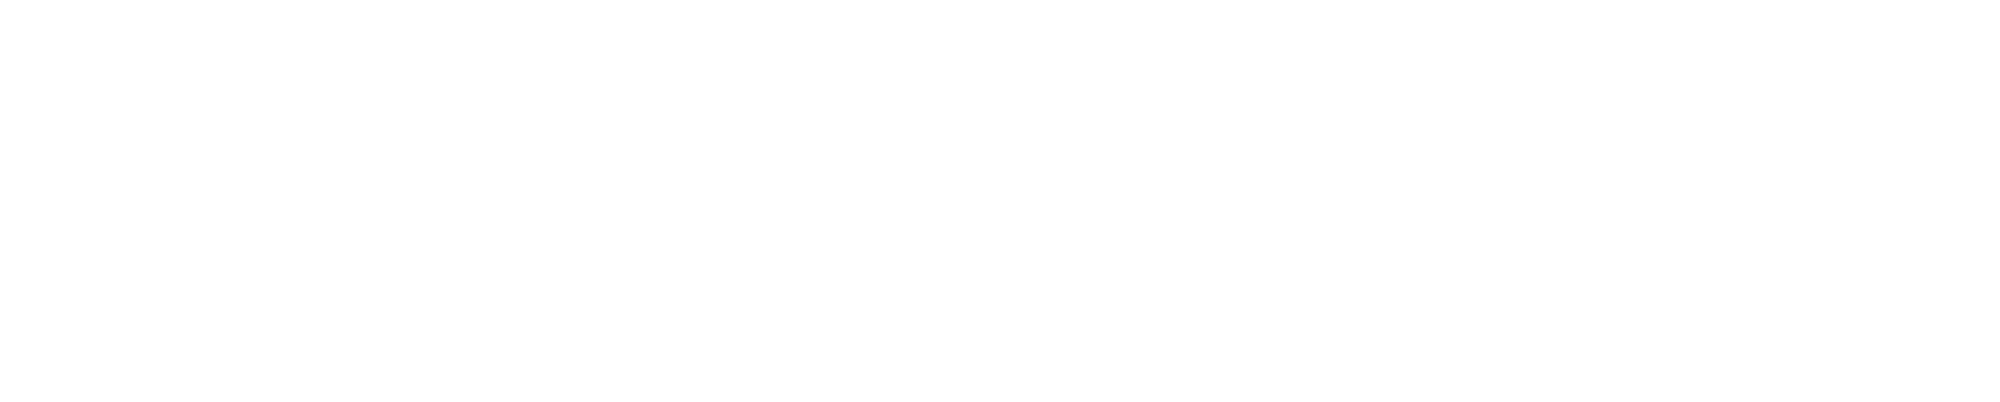 NETLOCK logo